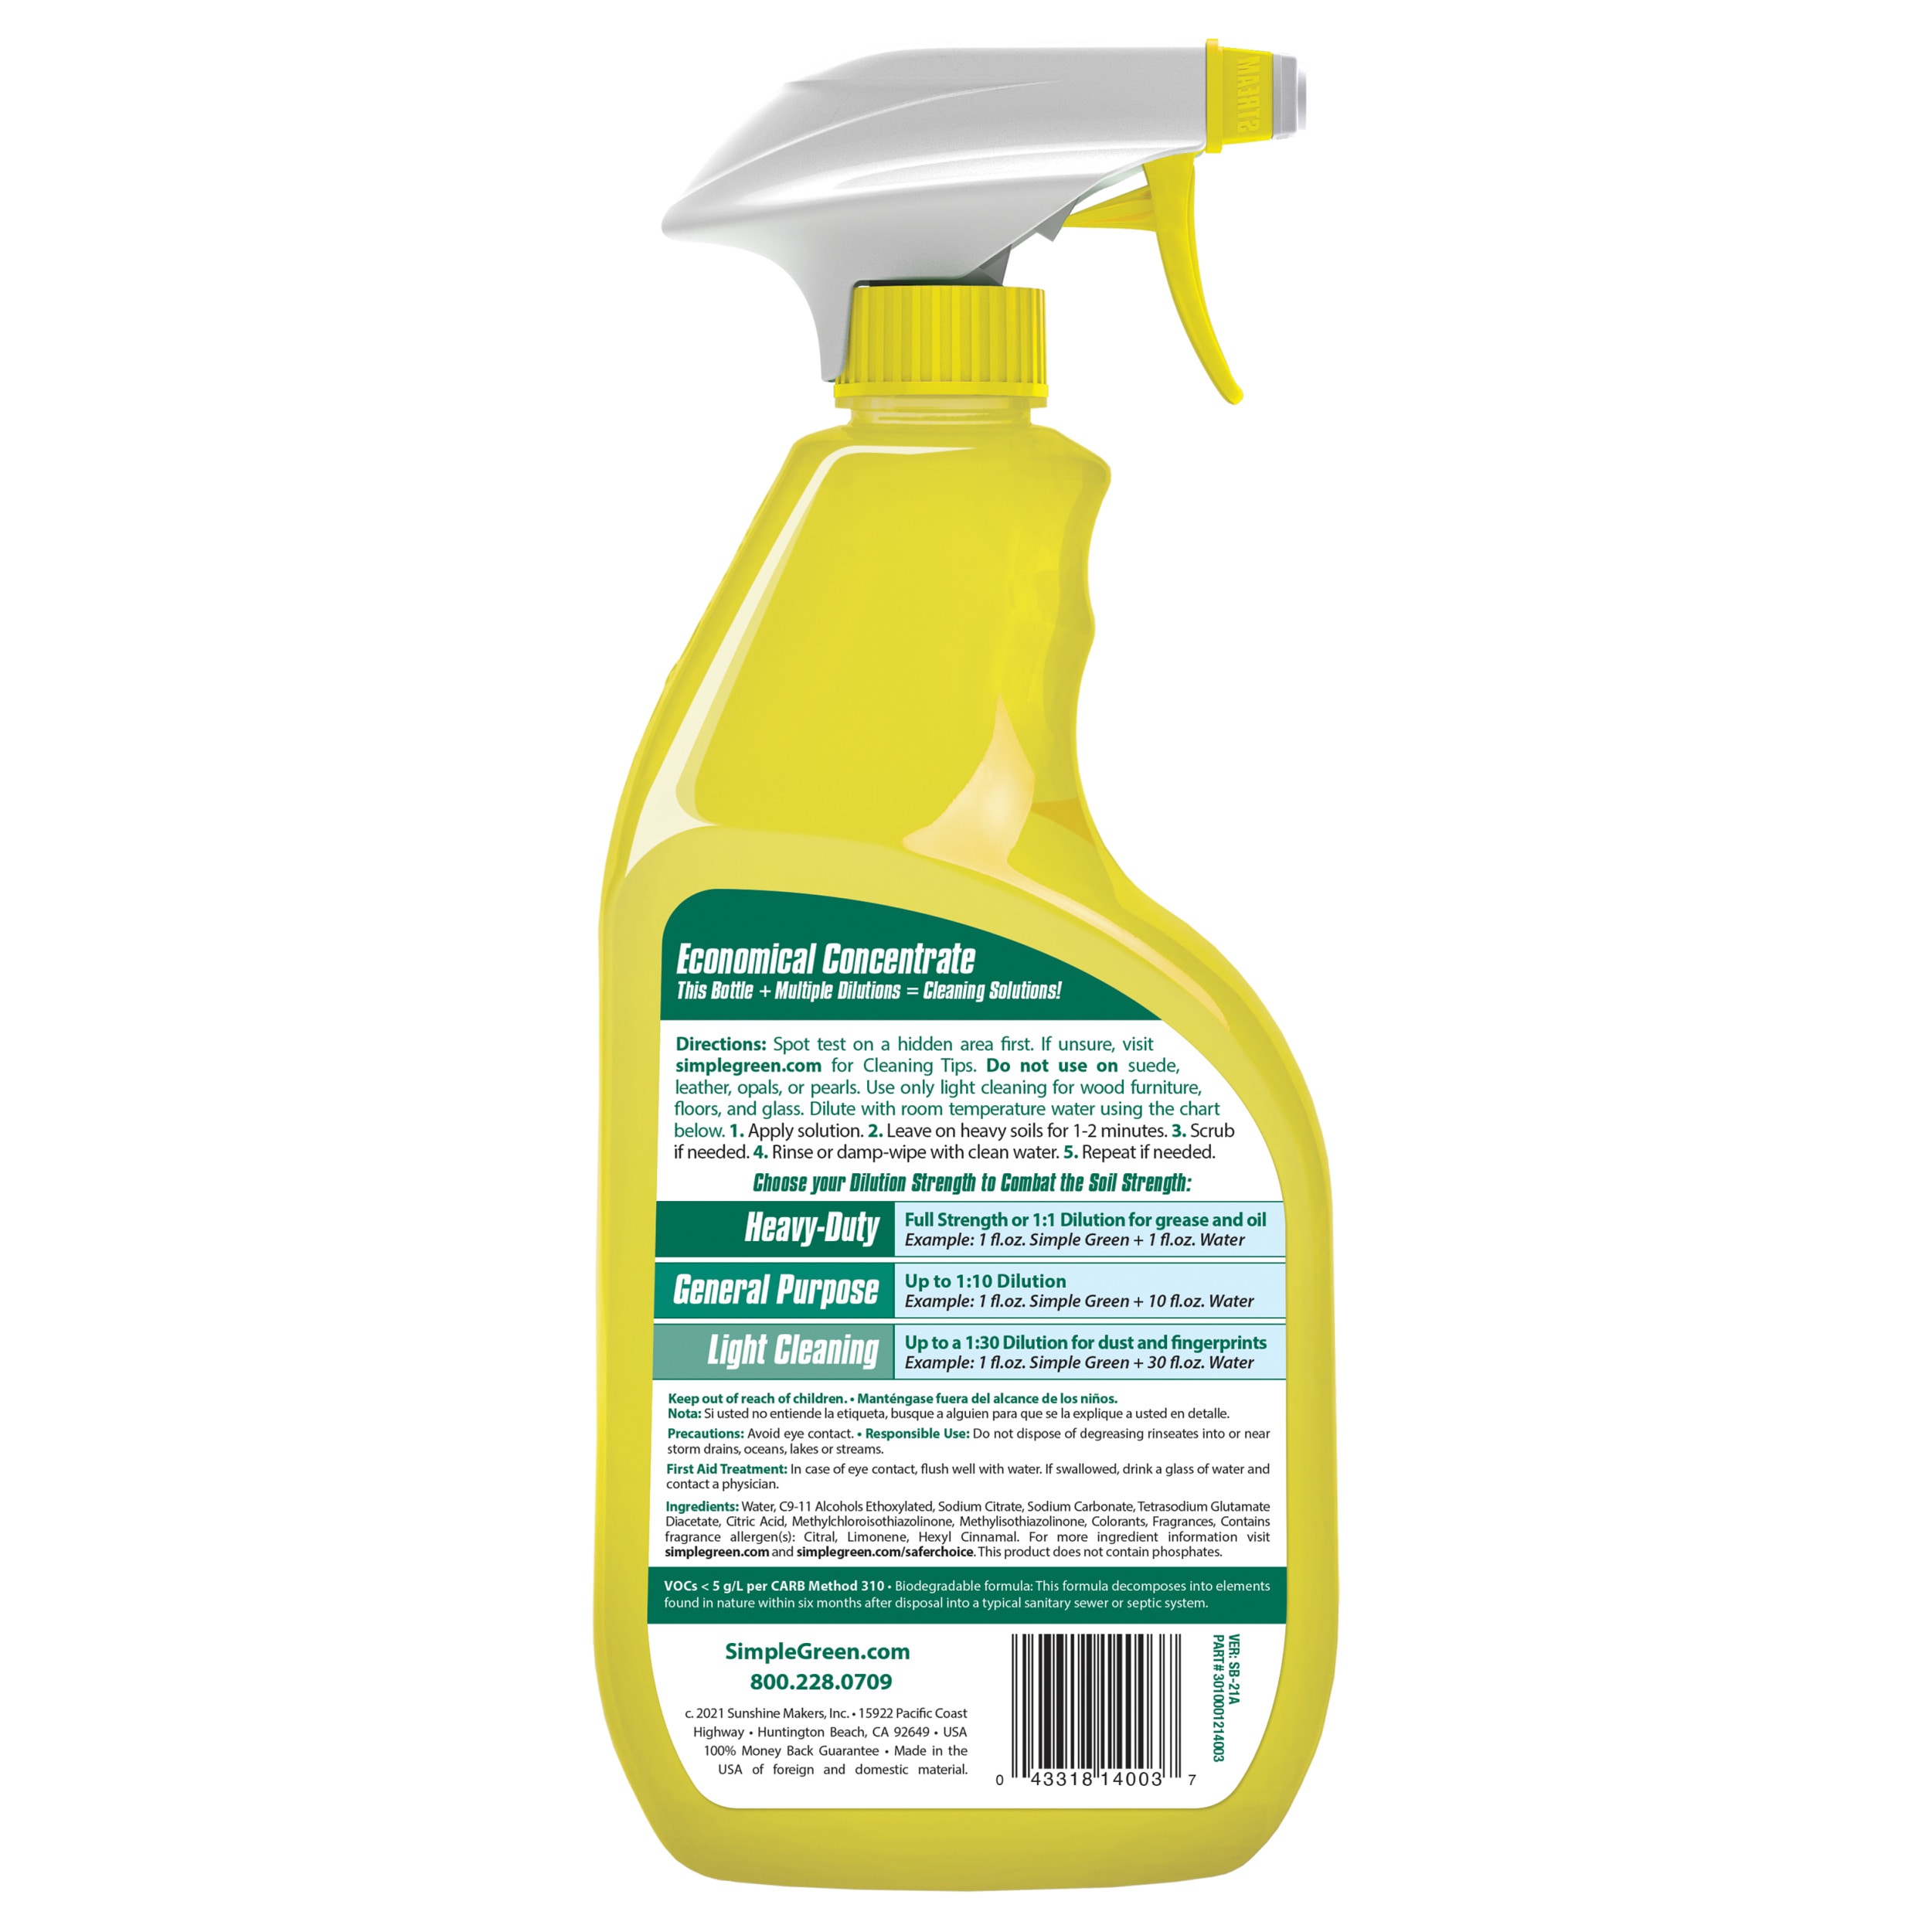 Simple Green 32-fl oz Lemon Liquid All-Purpose Cleaner in the All